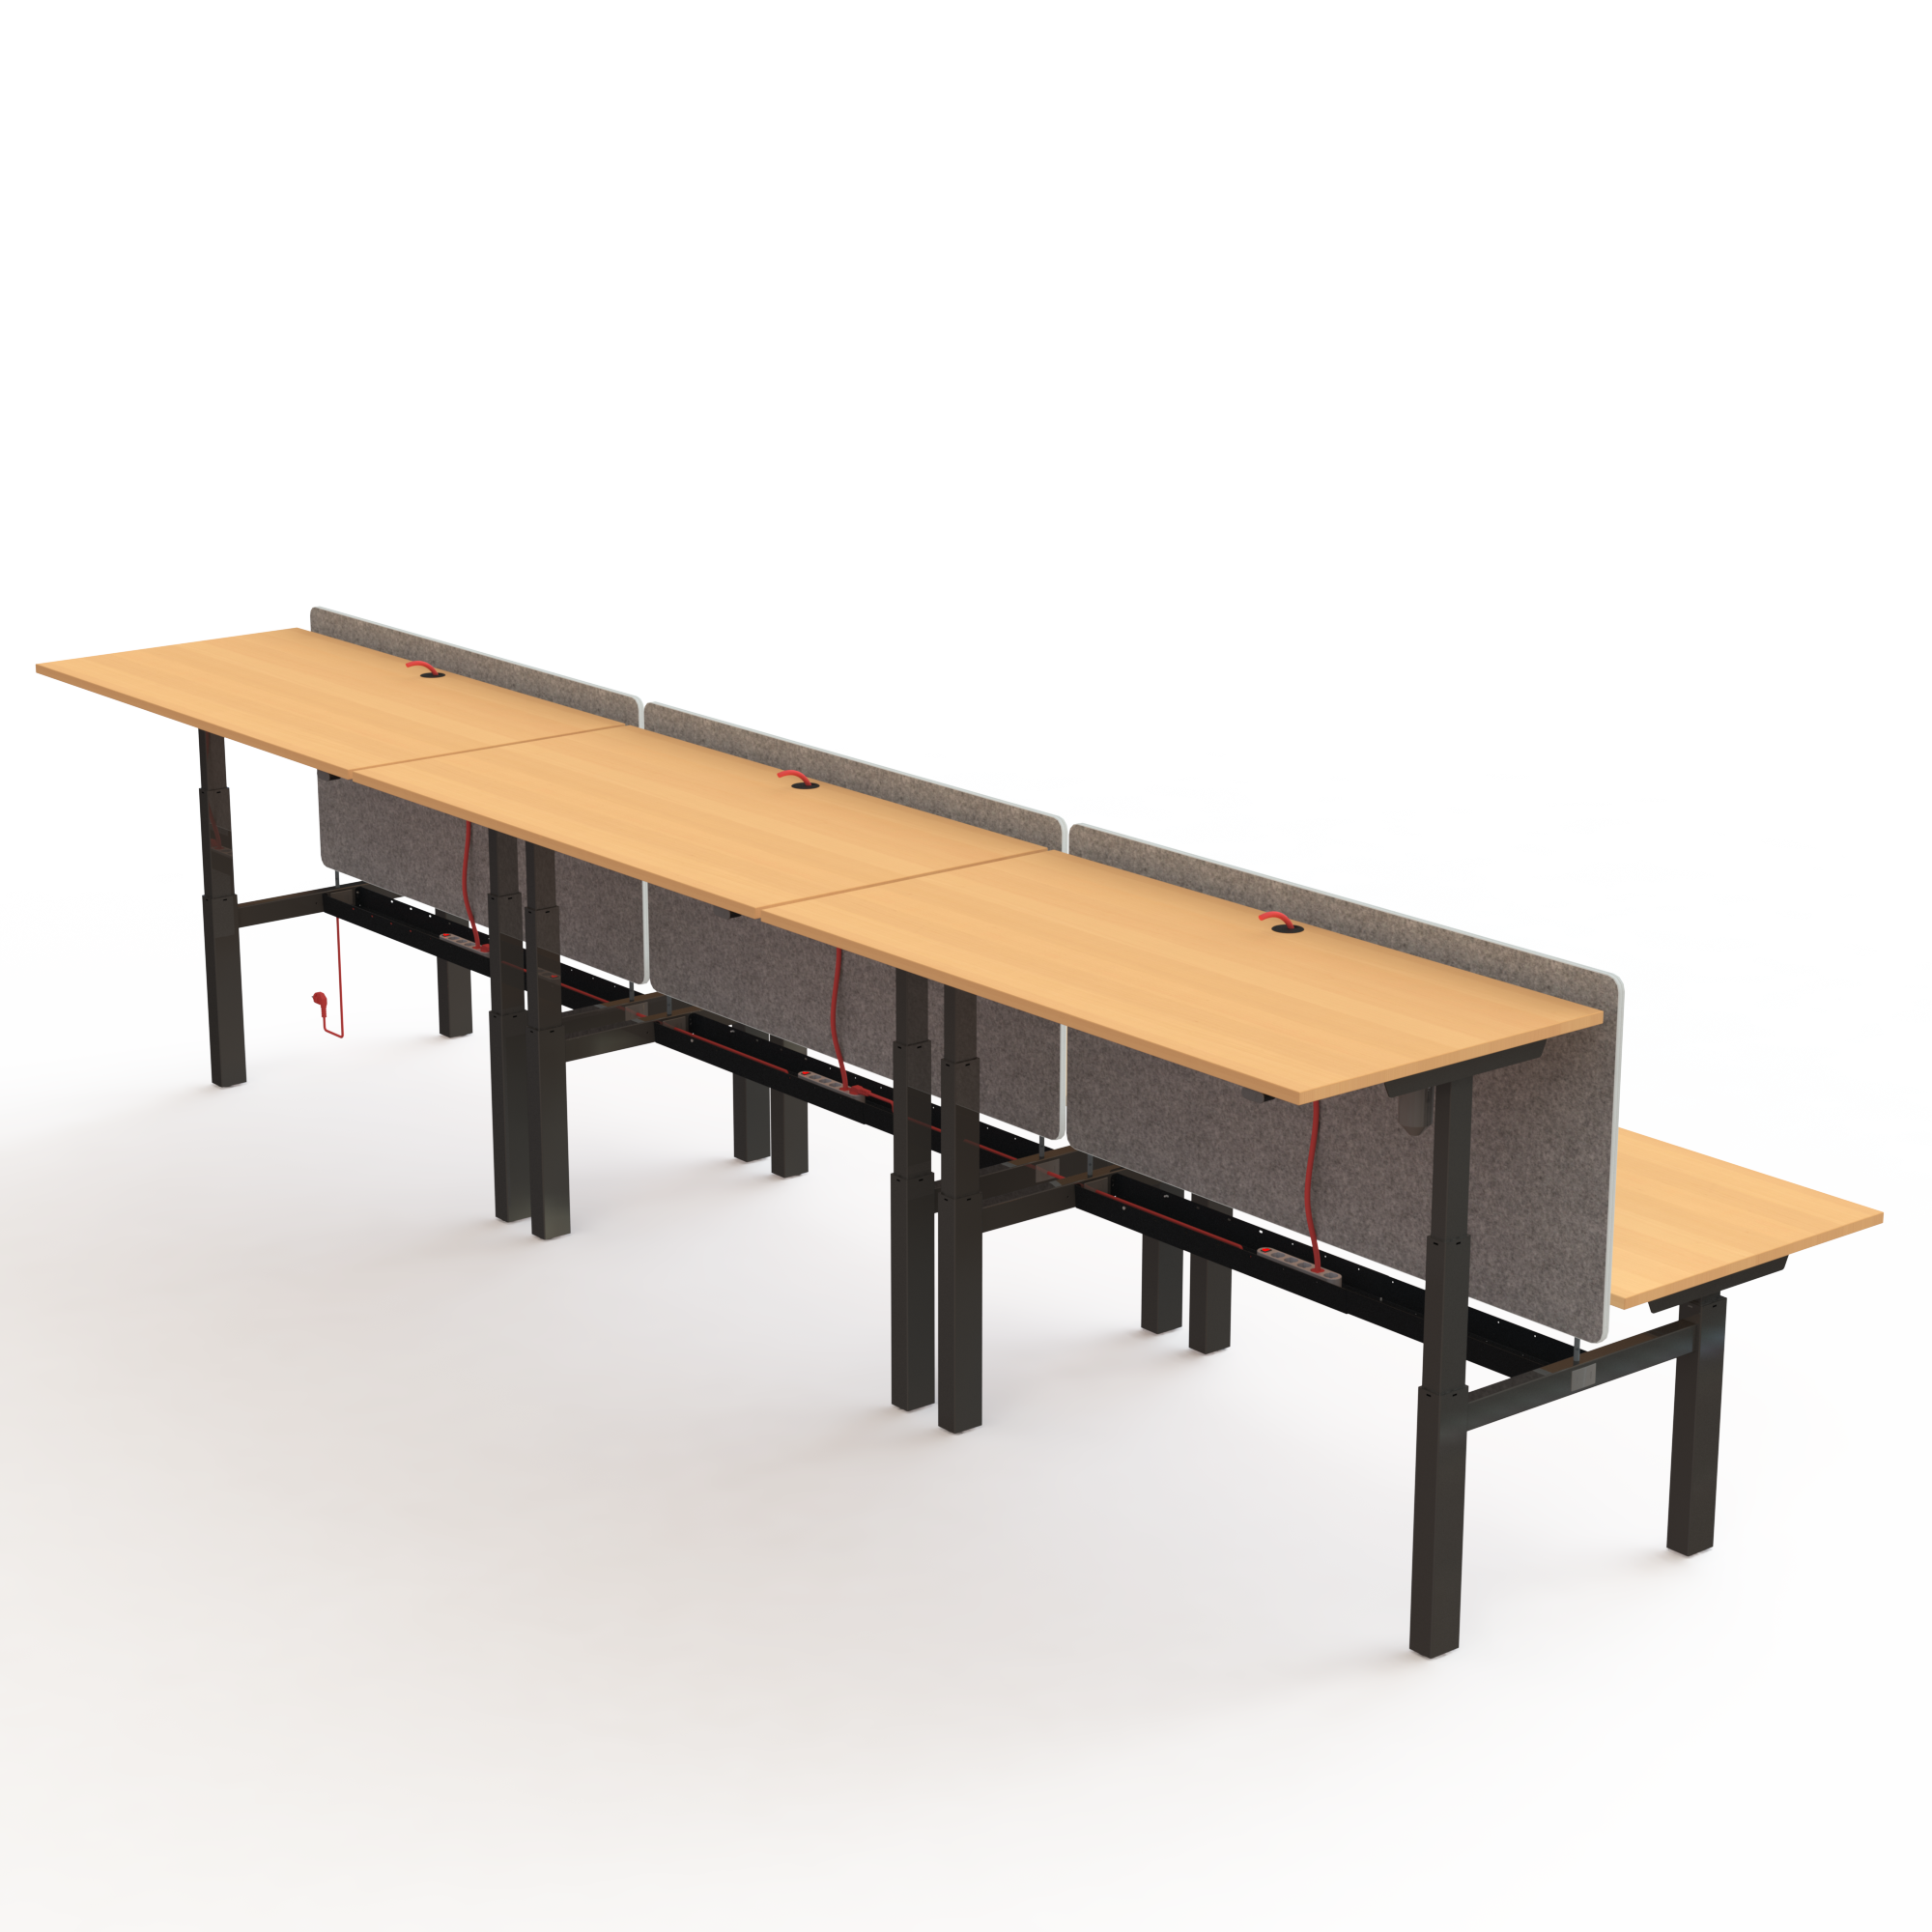 Electric Adjustable Desk | 160x80 cm | Beech with black frame